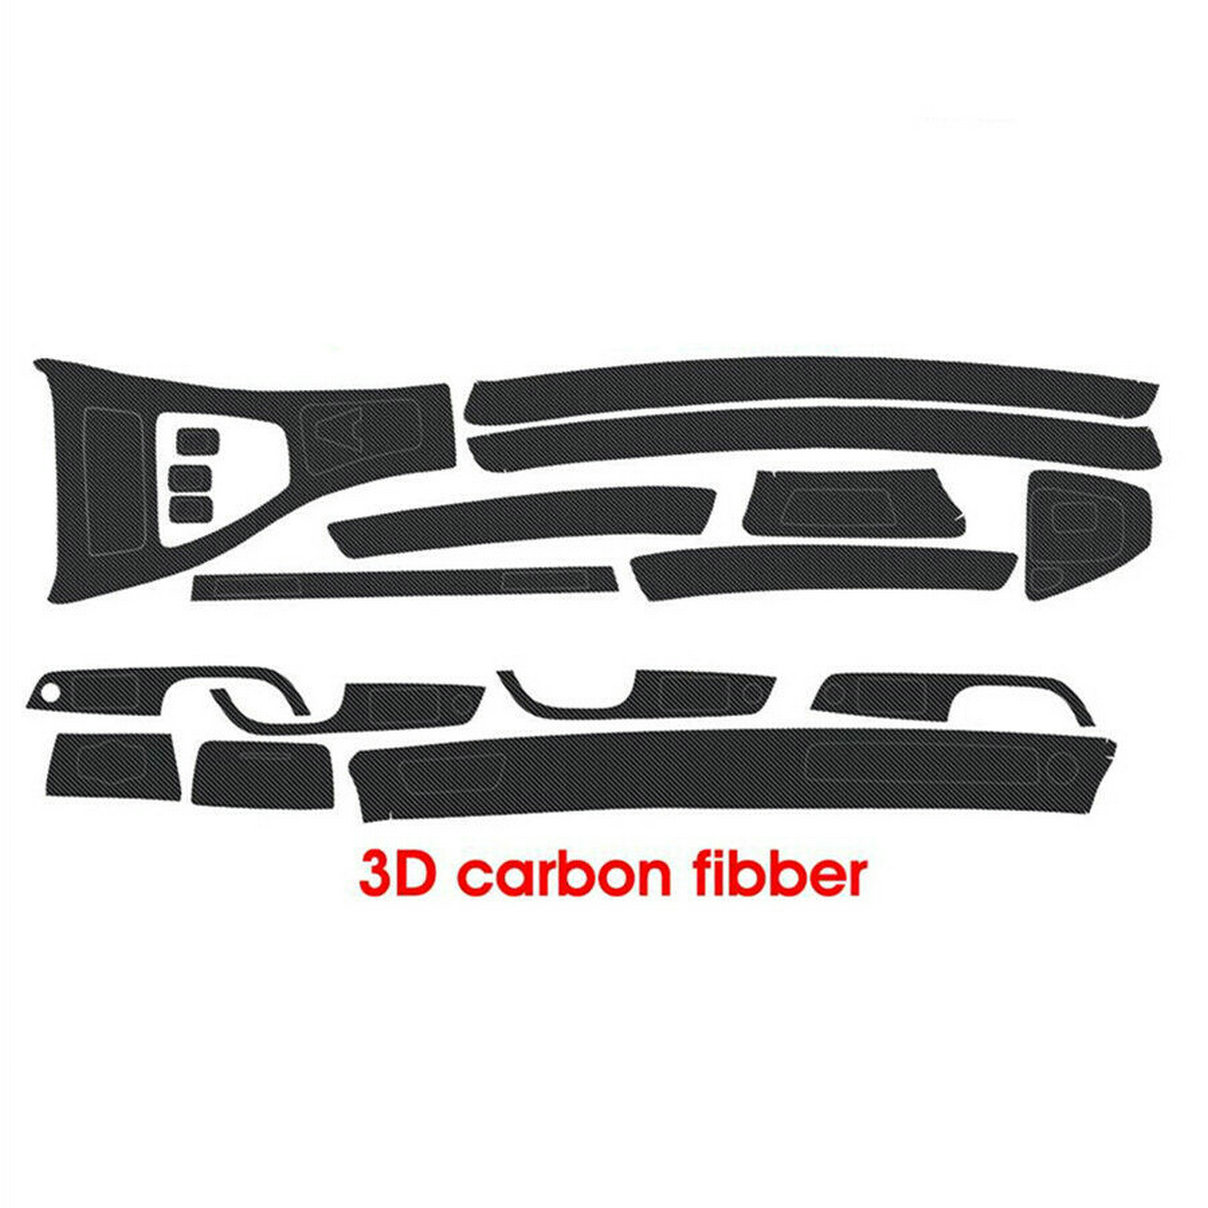  Car Center Console Panel Trim AC Vent Air Conditioner Sticker Carbon  Fiber Decal fits for BMW E90 E92 E93 2006 2007 2008 2009 2010 2011  Accessories (Version B) : Automotive